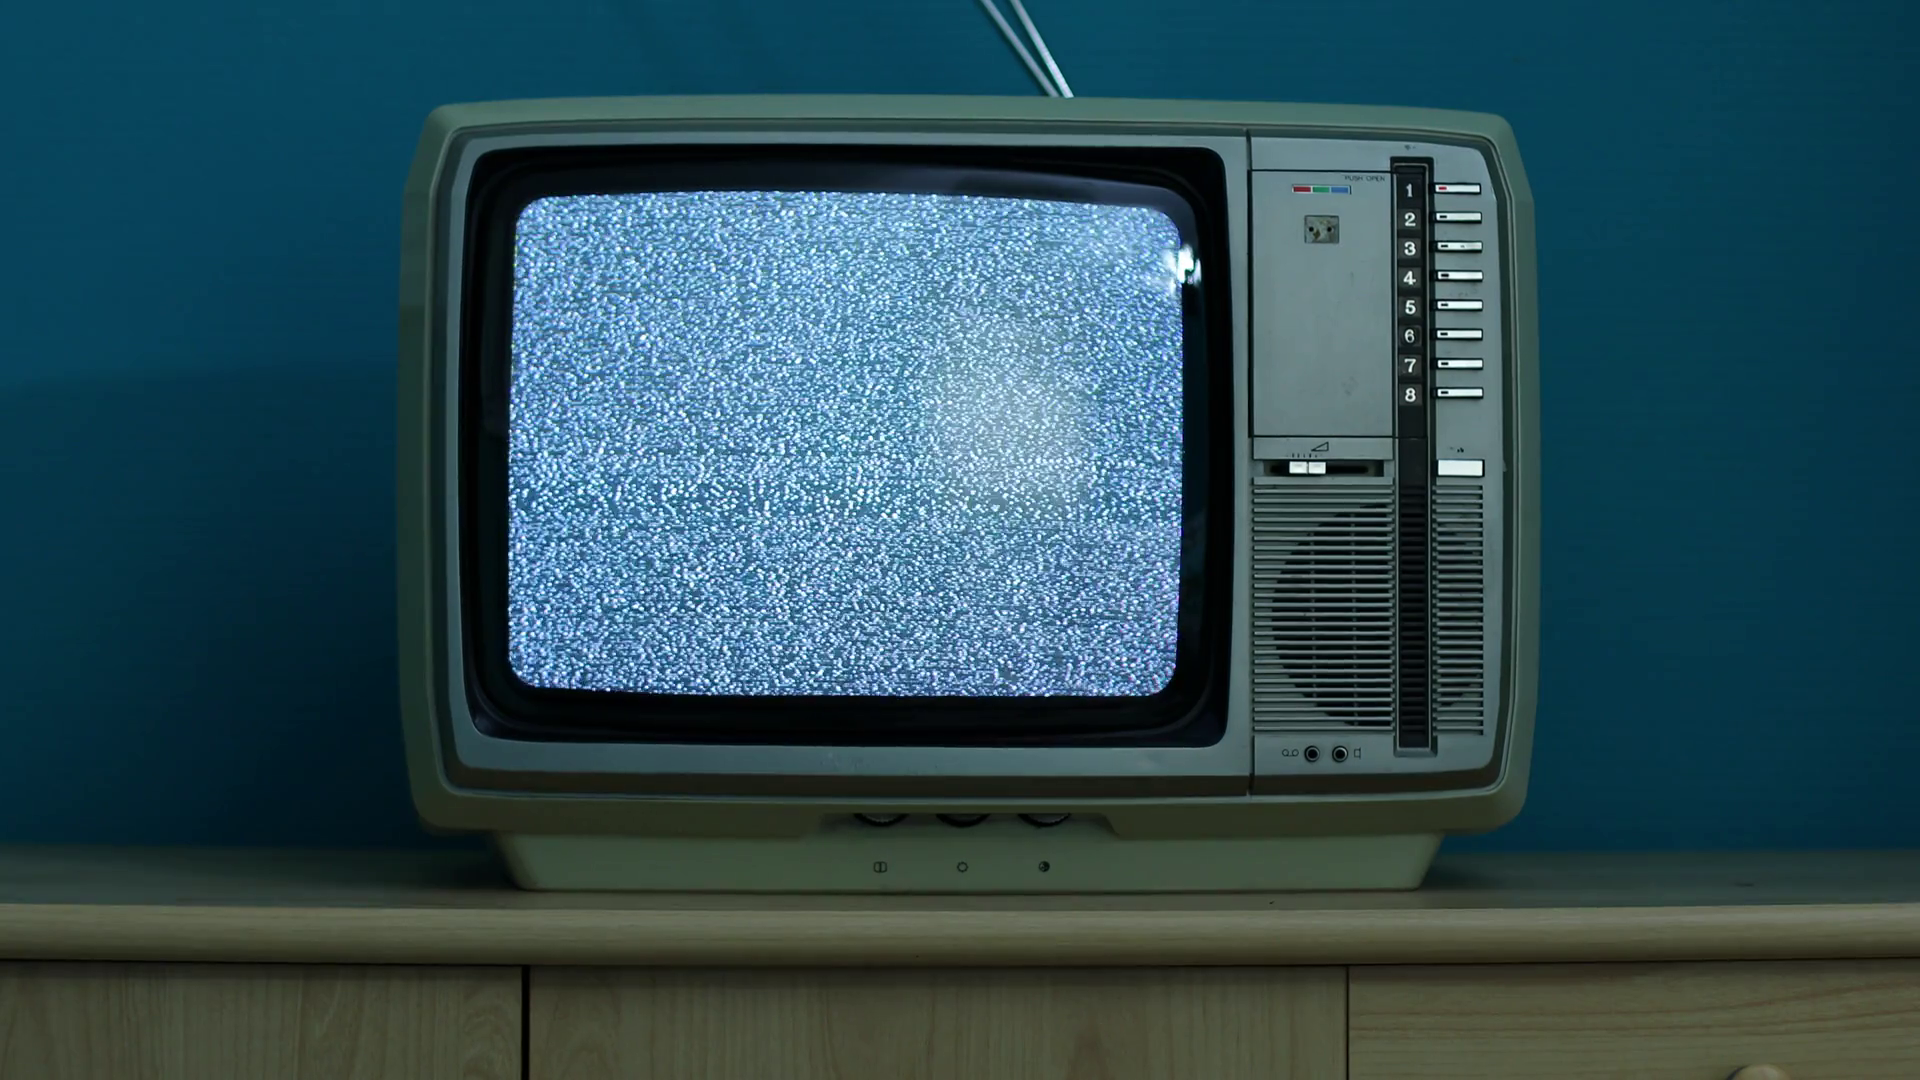 videoblocks-static-noise-on-a-vintage-tv-set-in-a-dim-room_hrzk-wczpe_thumbnail-full01